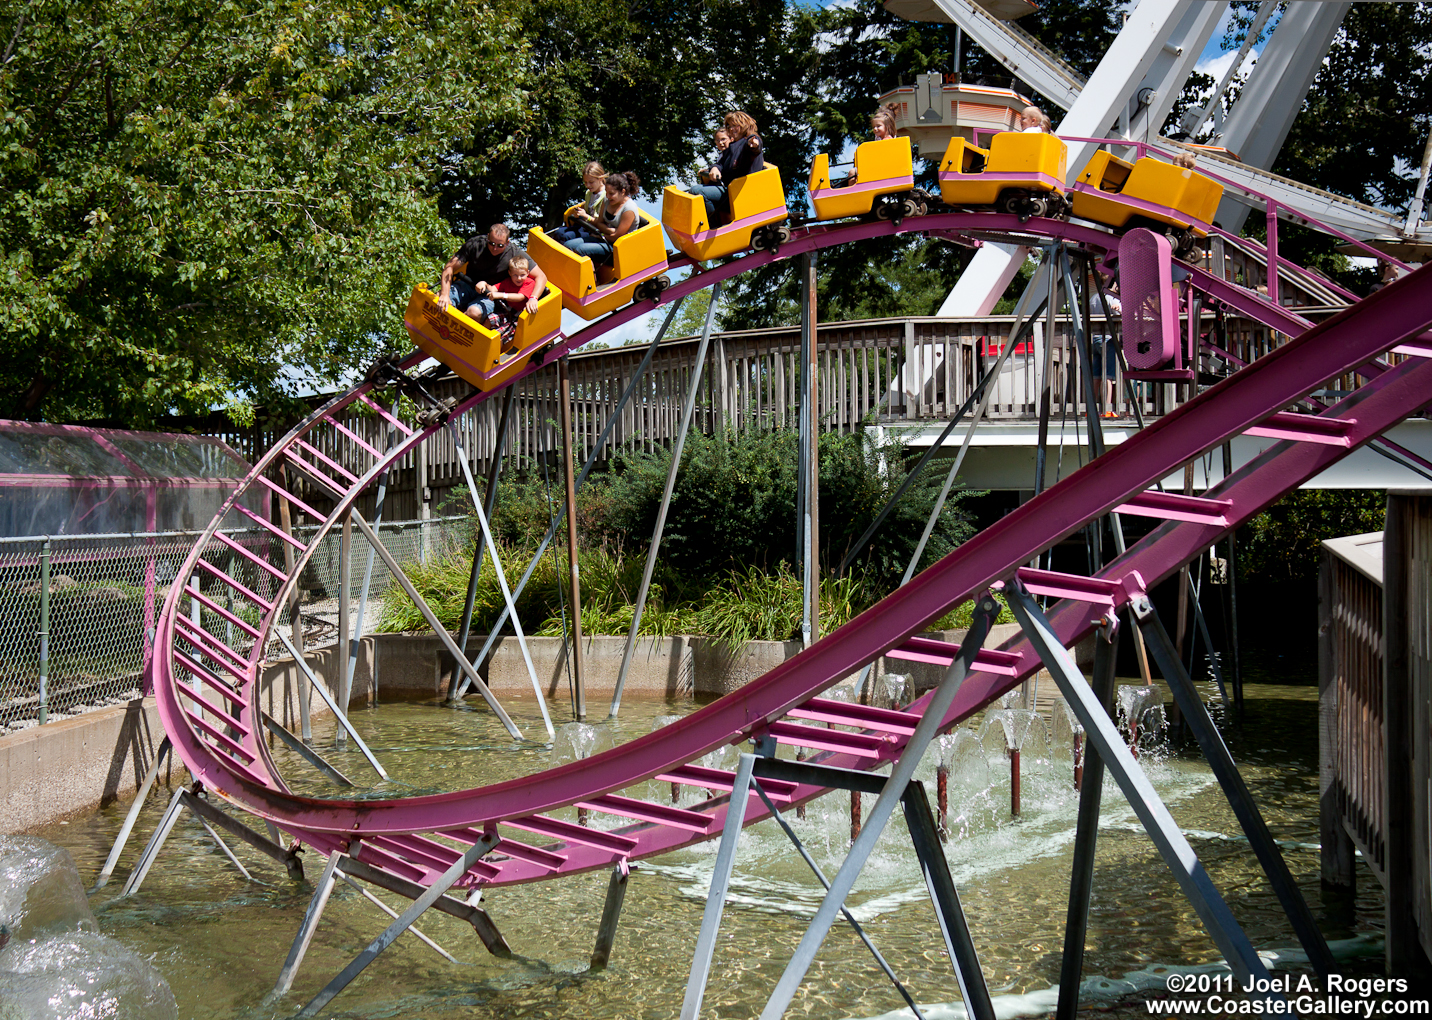 Ravine Flyer III - roller coaster over the water